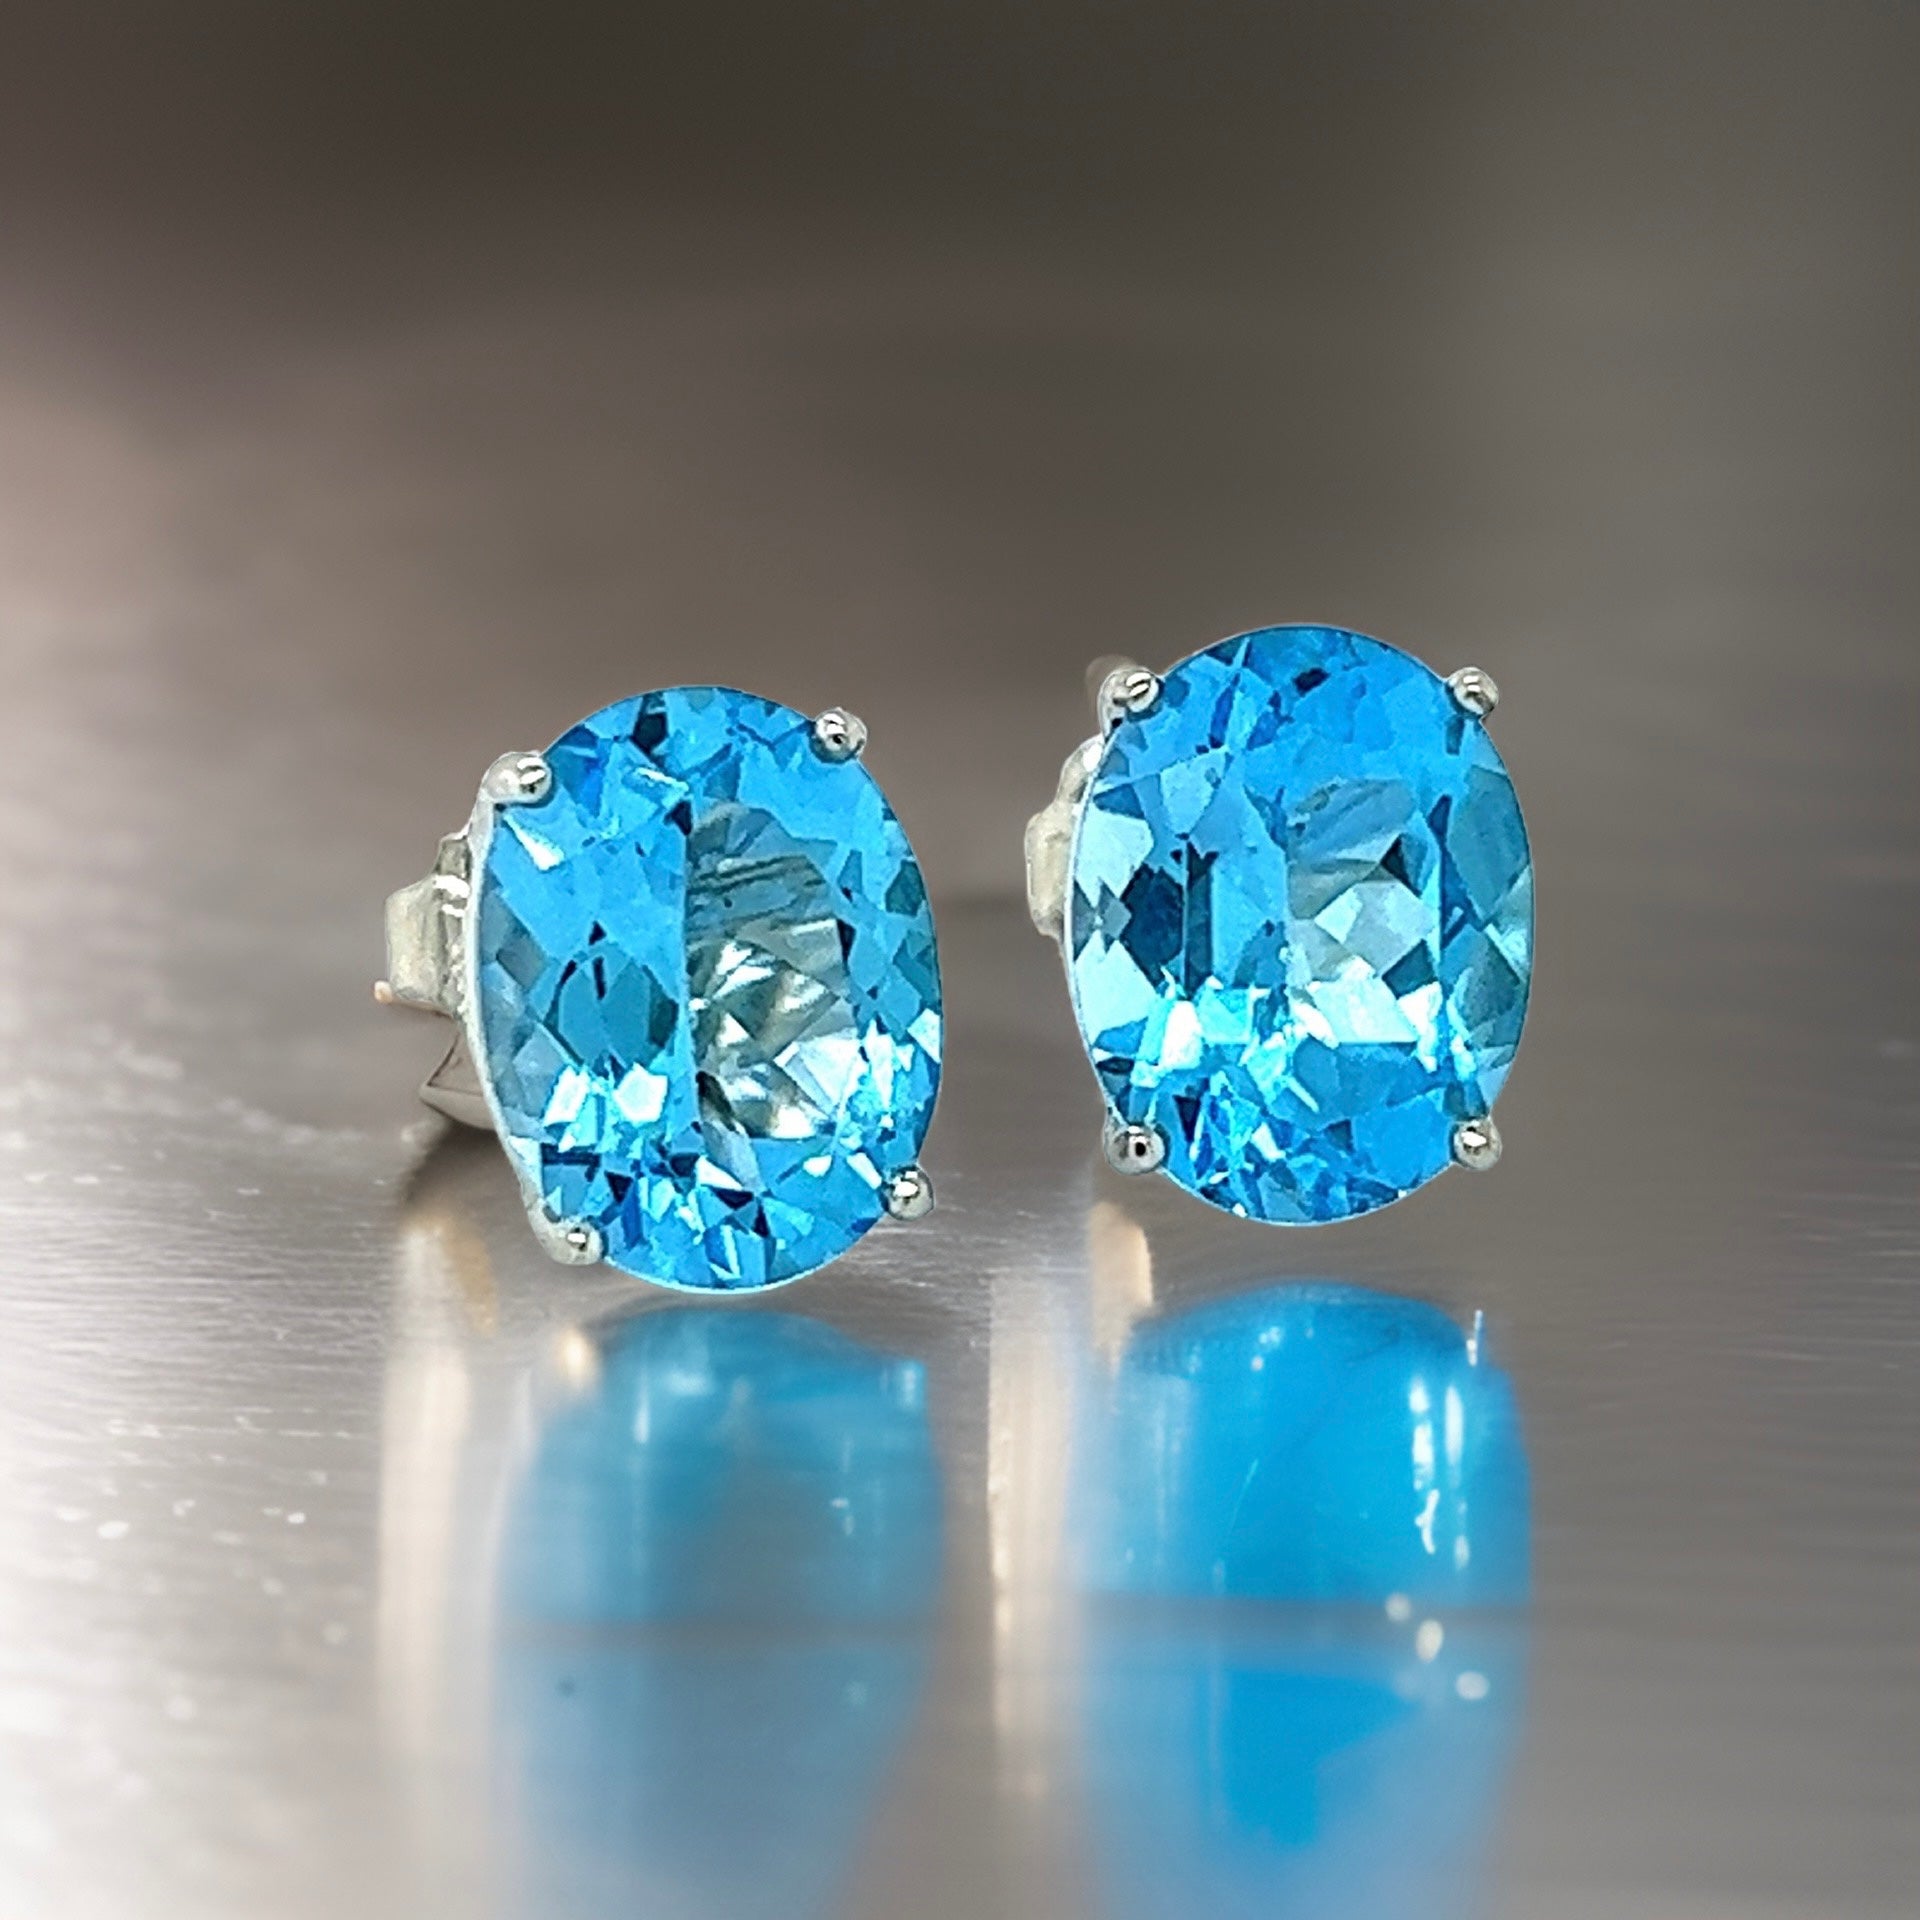 Natural Blue Topaz Stud Earrings 14k White Gold 5.79 TW Certified $599 307906 - Certified Fine Jewelry